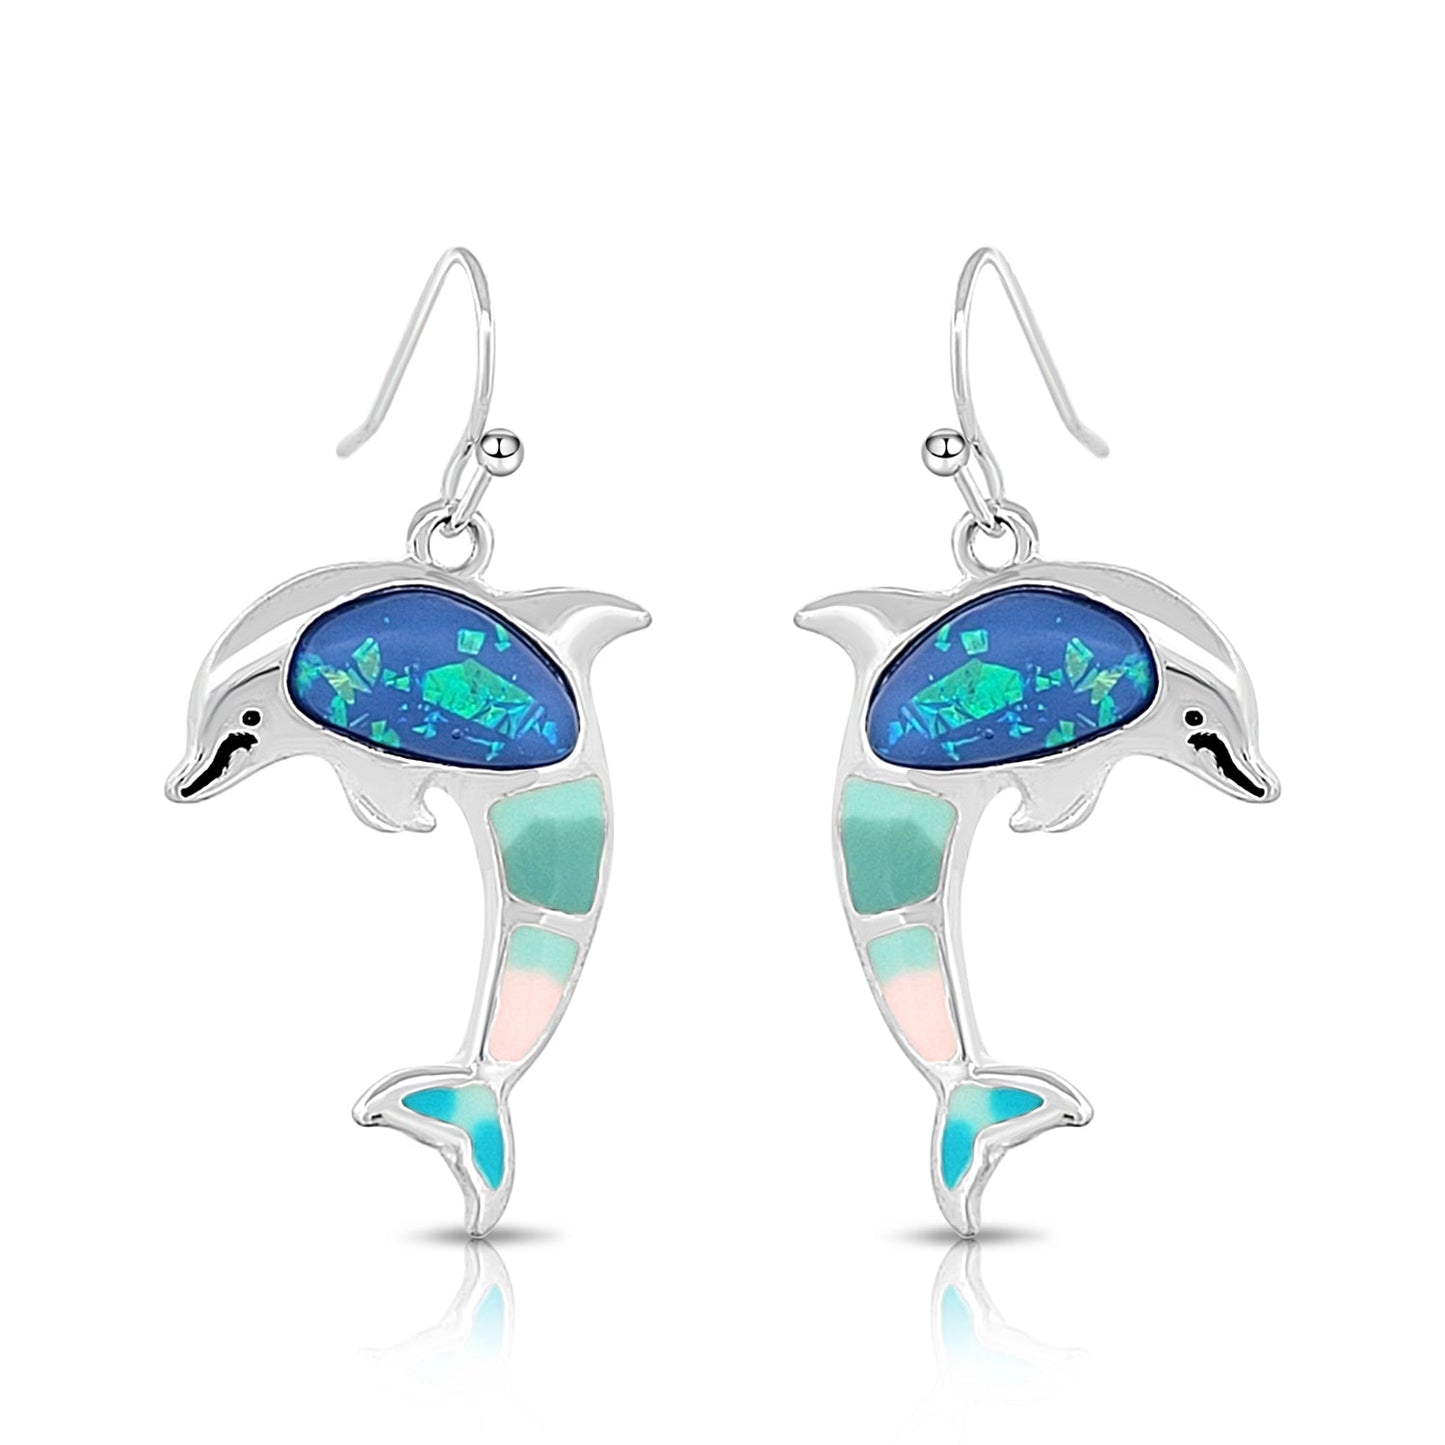 BESHEEK Silvertone and Pastel Resin Dolphin Dangle Earrings | Handmade Hypoallergenic Boho Beach Gala Wedding Style Fashion Earrings